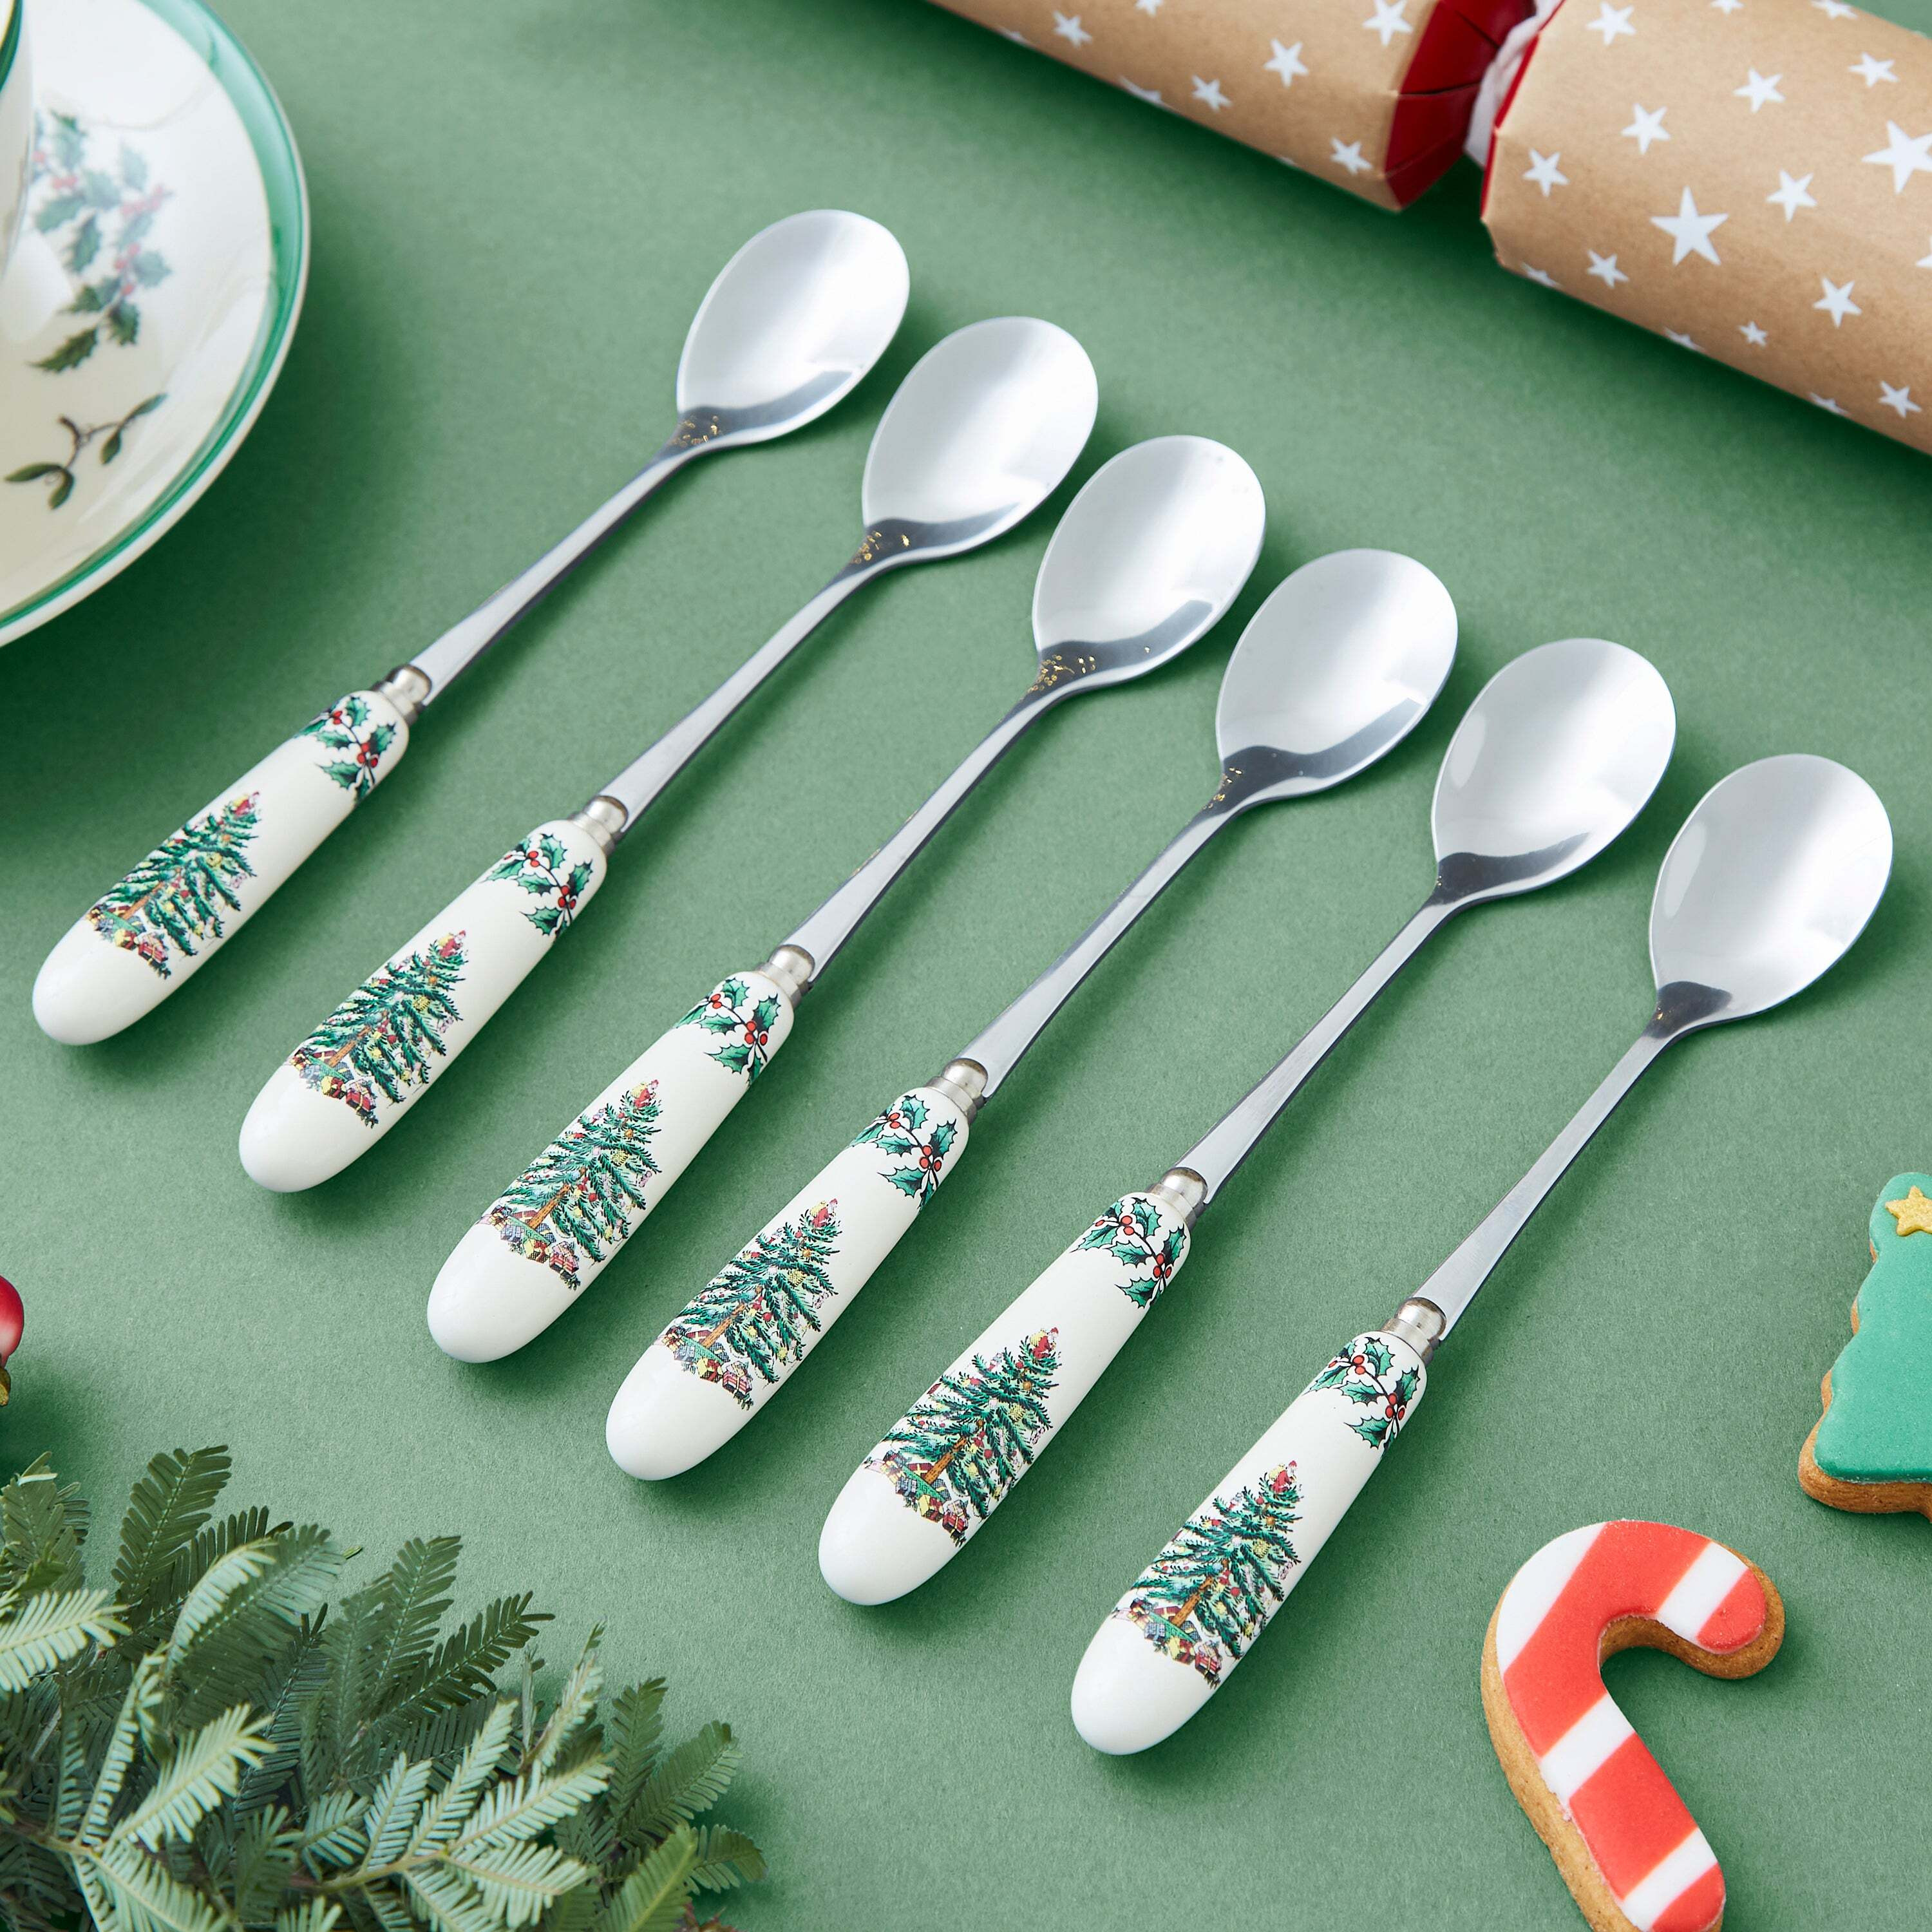 Dunelm White & Green Christmas Tree Set of 6 Tea Spoons, 15.5cm x 2.5cm x 1cm White